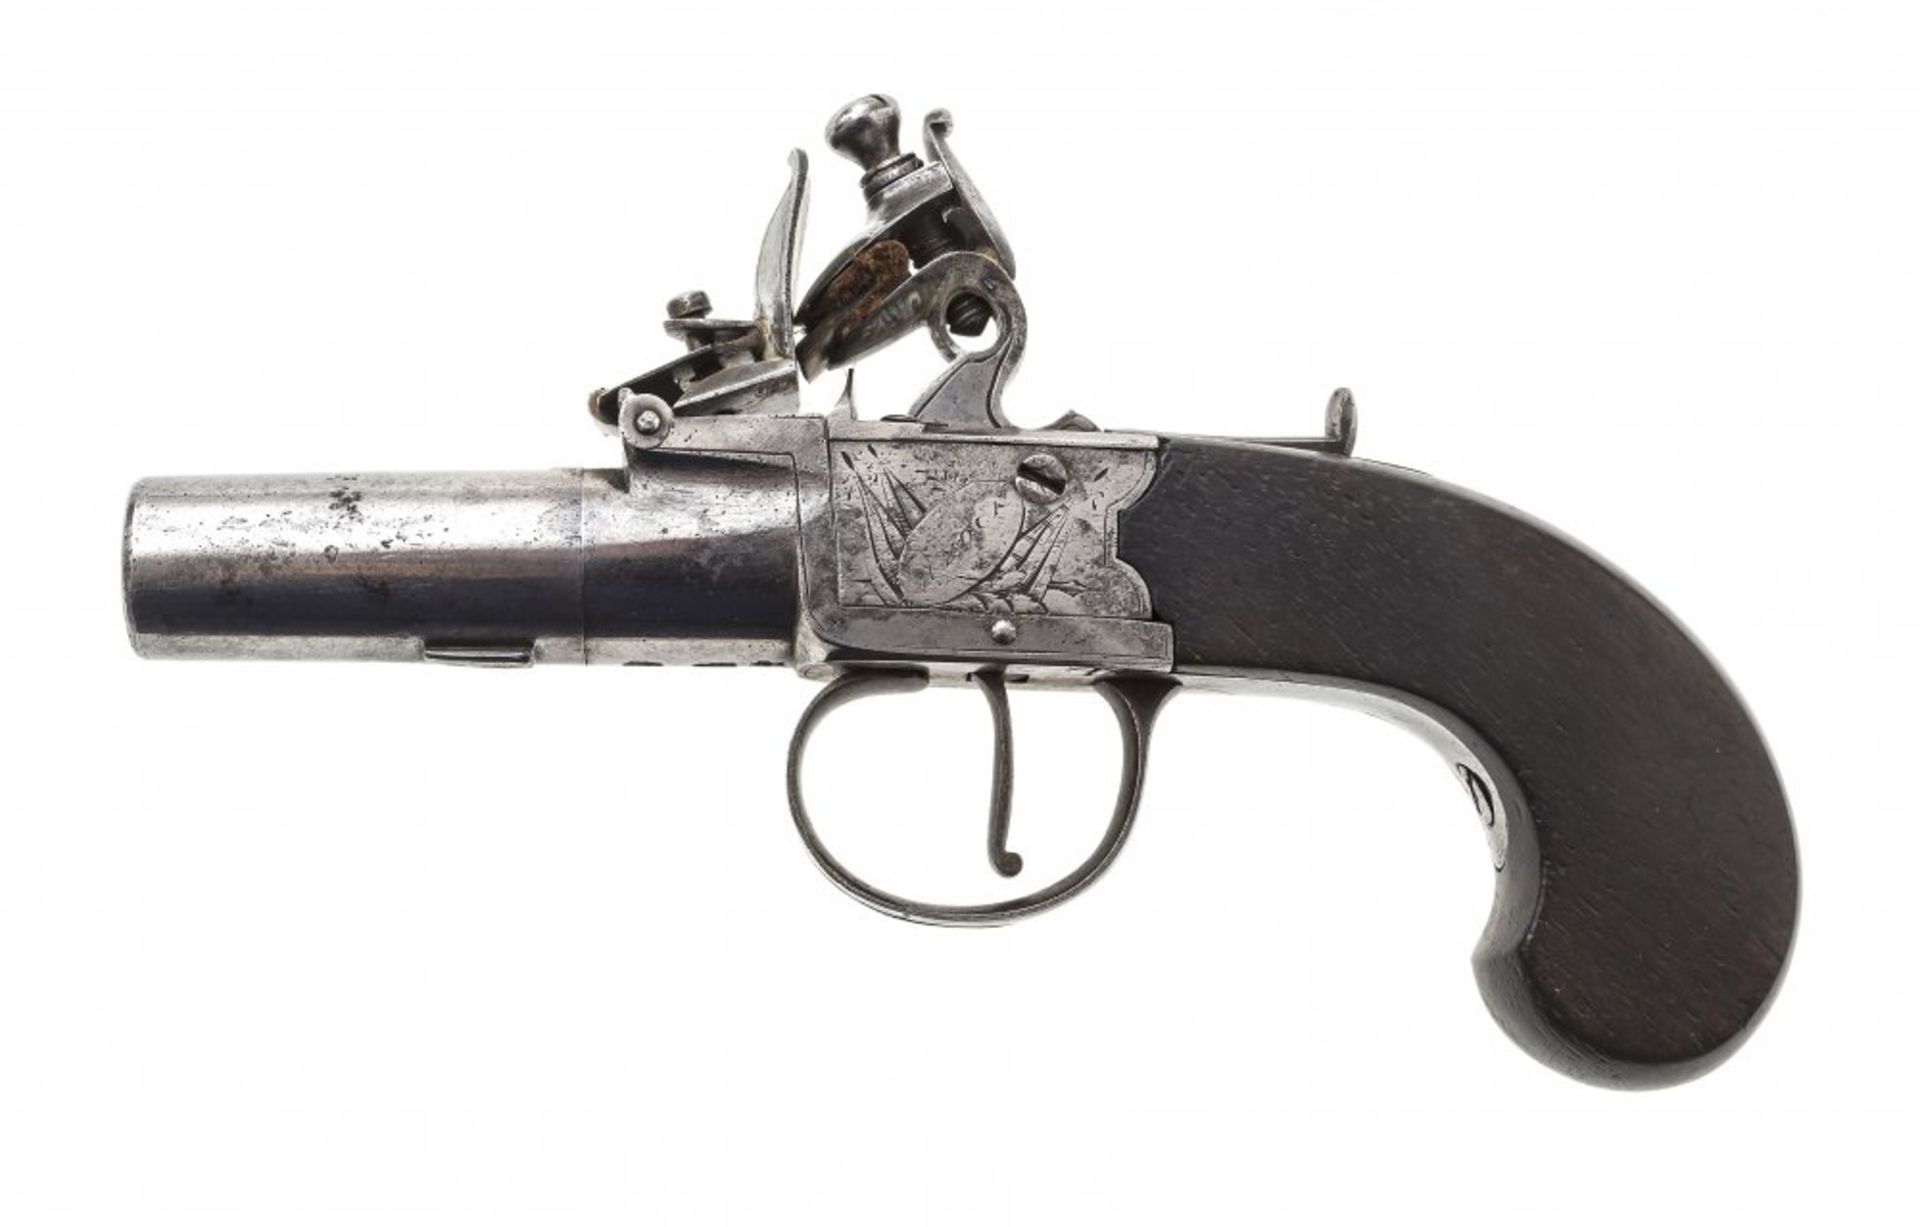 Steinschloss-Pistole19. Jh. Holzgriff. Gravurdekor. Sign.: Mock. Verändert. L. 16 cm.Stein gun